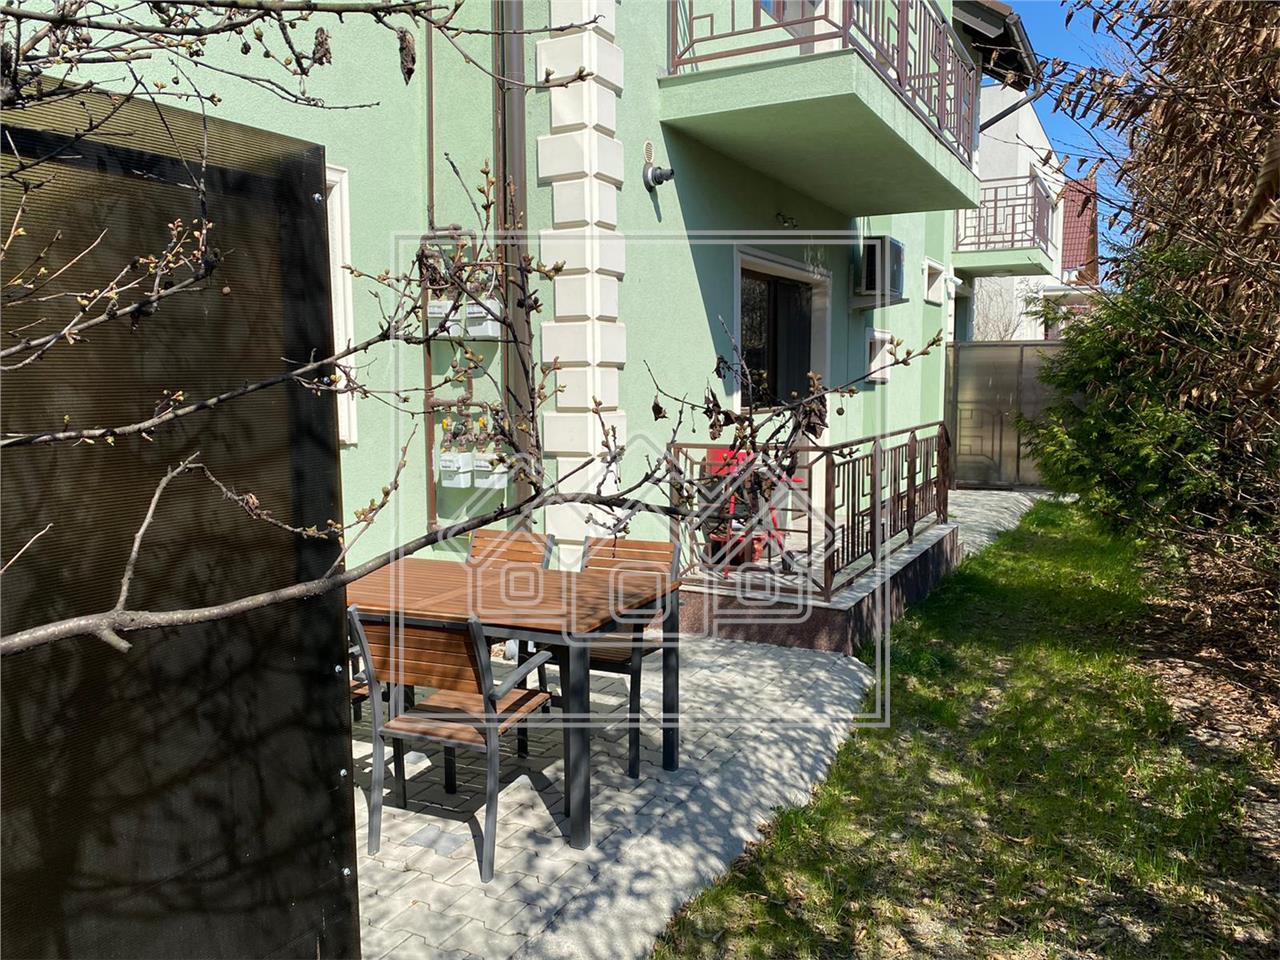 Apartament de inchiriat in Sibiu - 3 camere, Balea - gradina, garaj